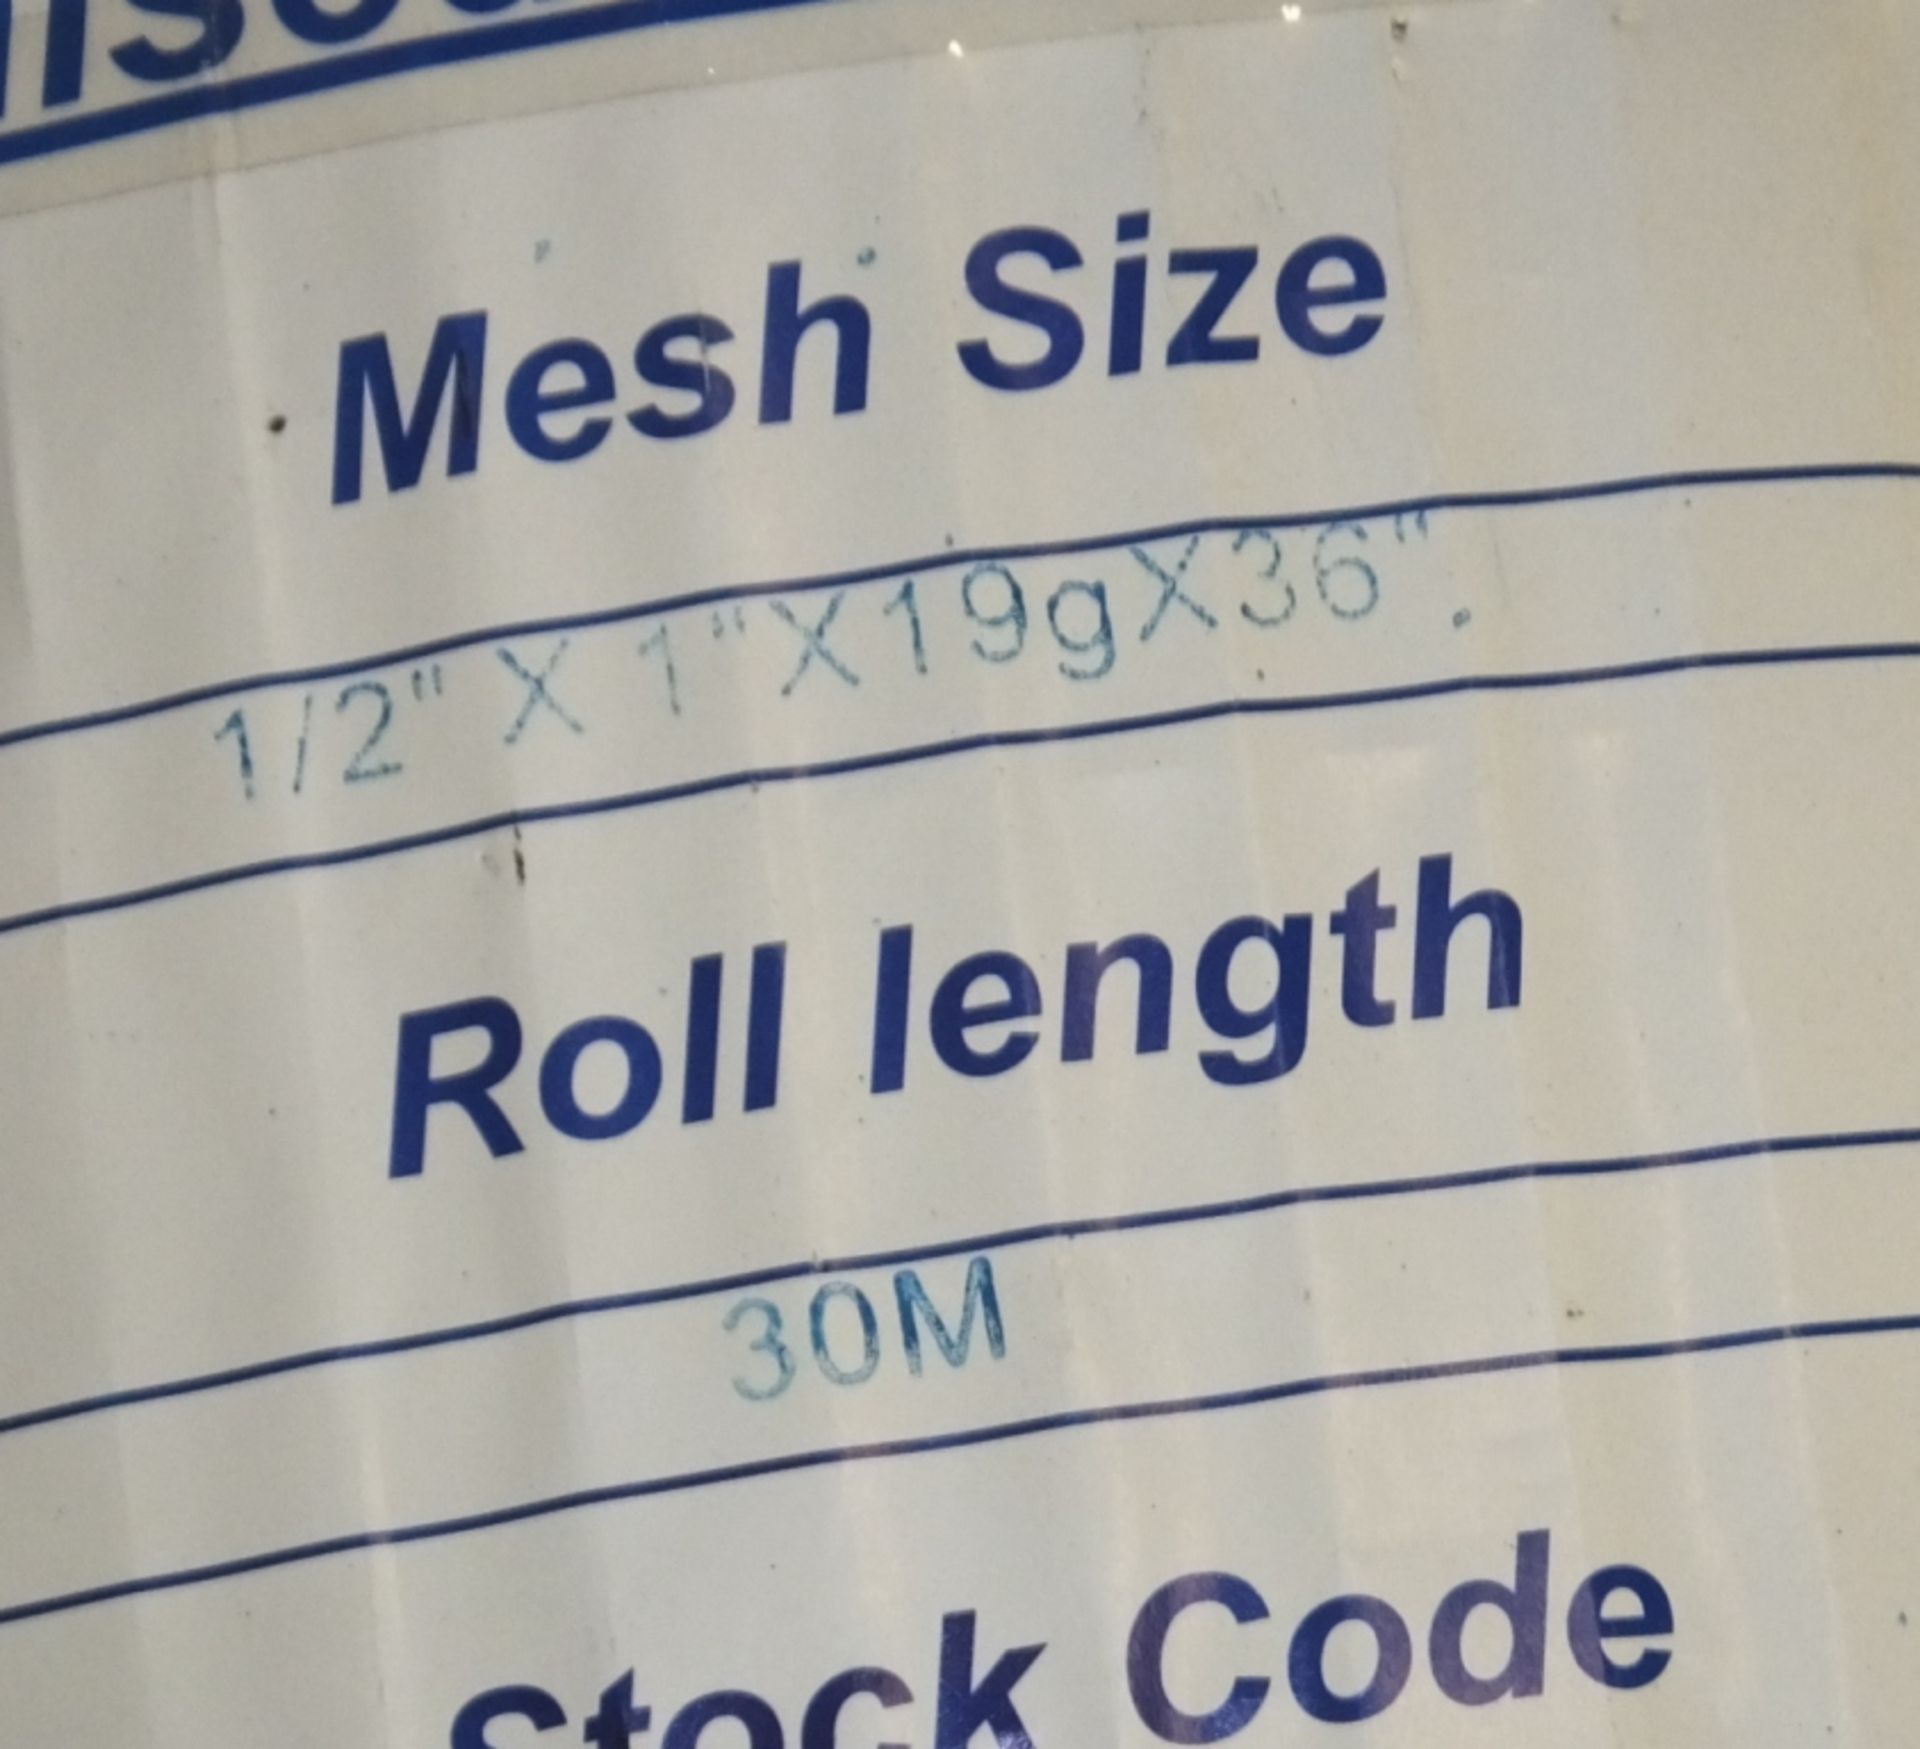 4x rolls of Meshmaster galvanised welded mesh - 30M rolls - Image 4 of 4